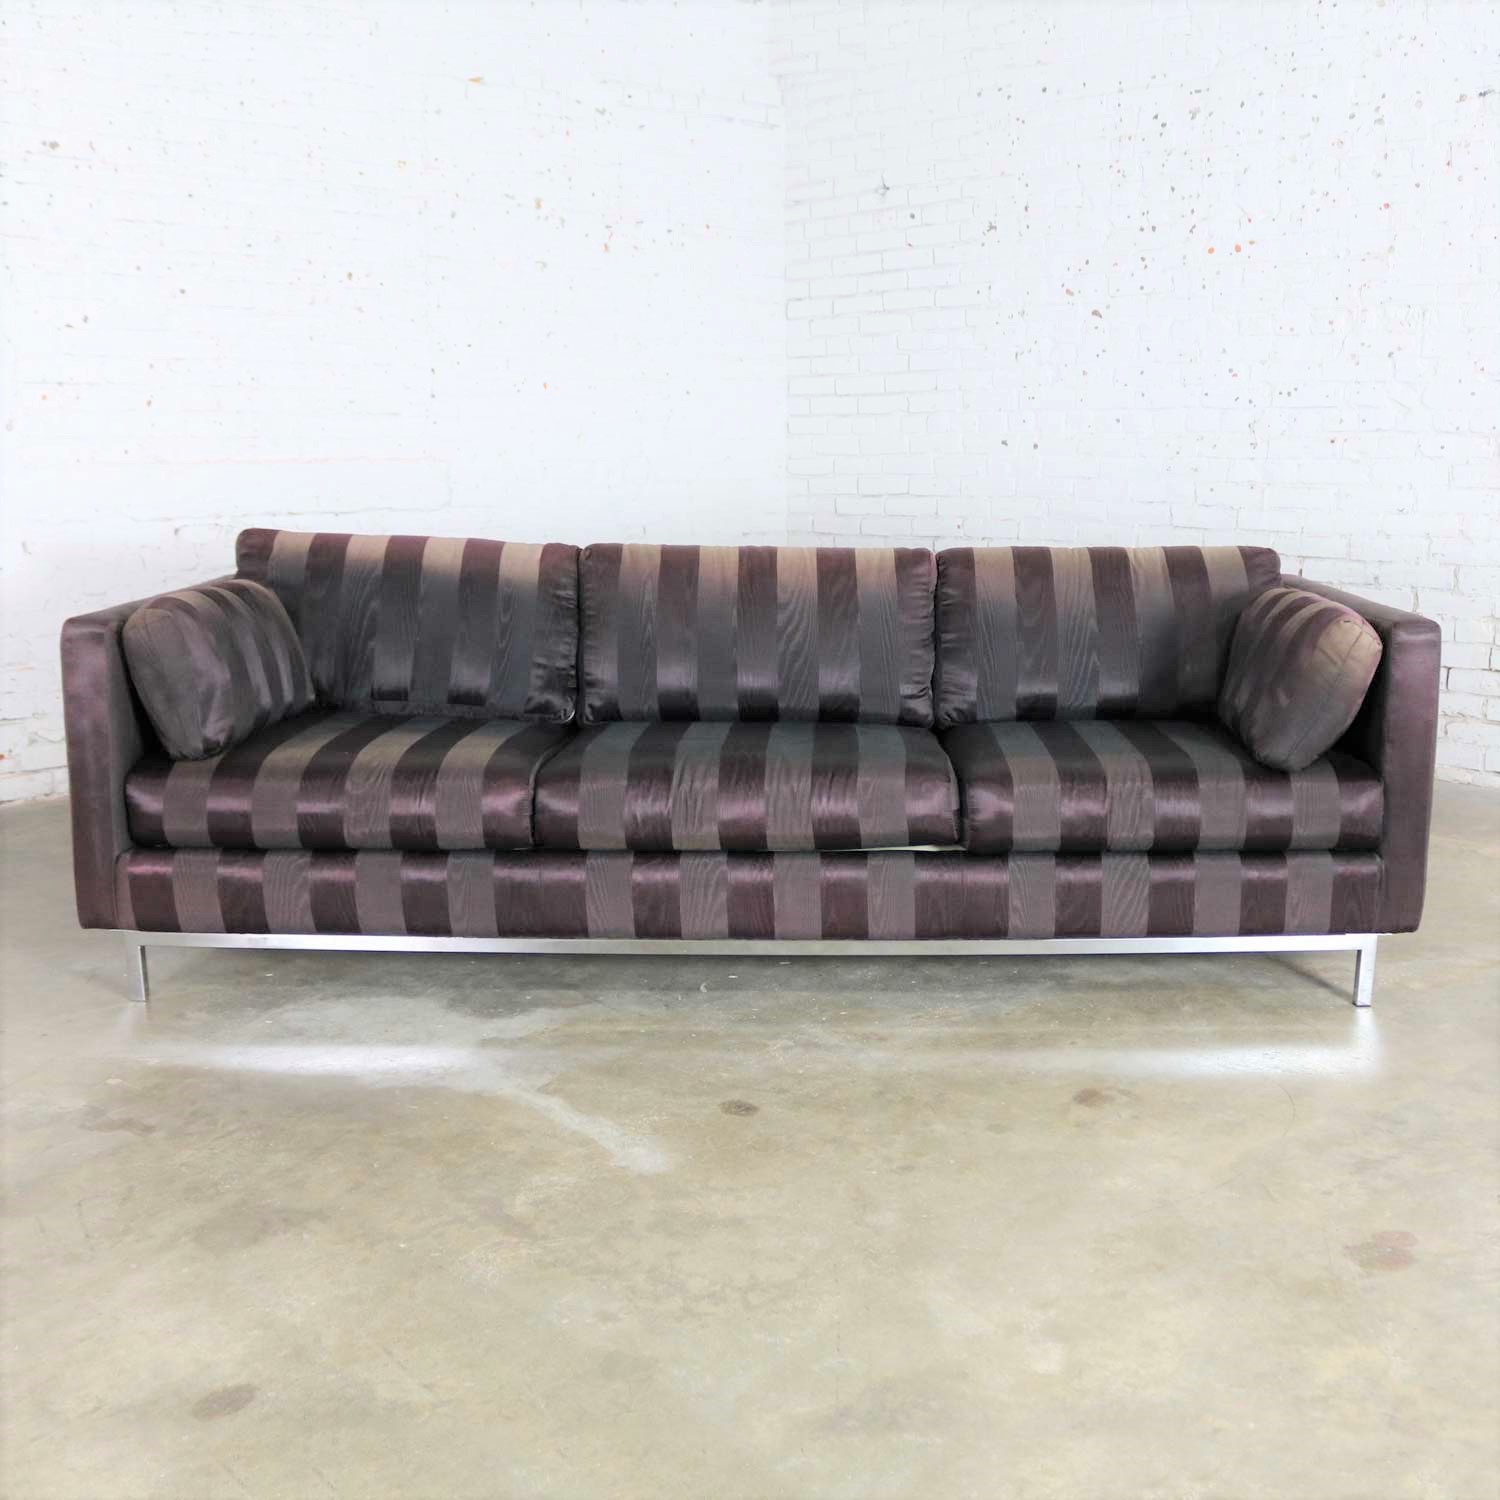 Mid Century Modern Chrome Cube Tuxedo Sofa in Style of Knoll or Baughman